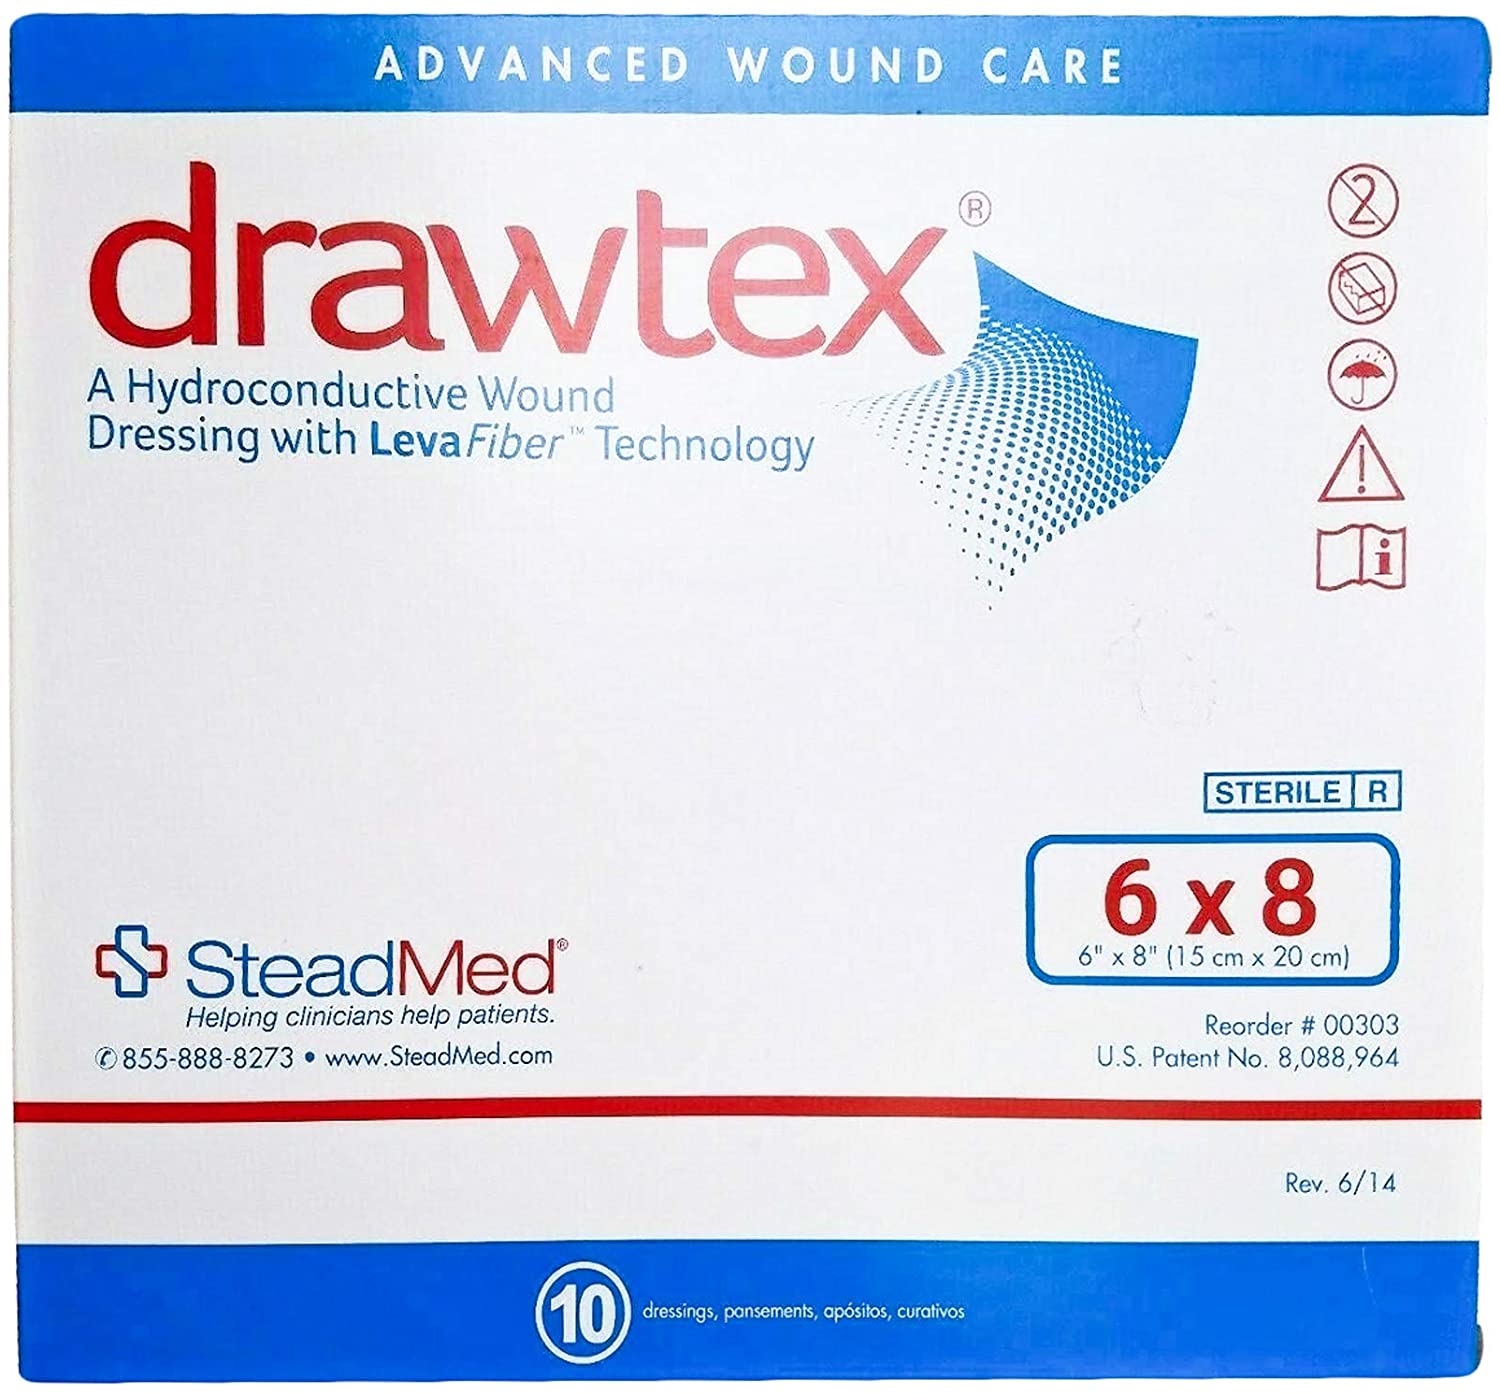 Steadmed medical 303 Drawtex Hydroconductive Dressing with Levafiber 6